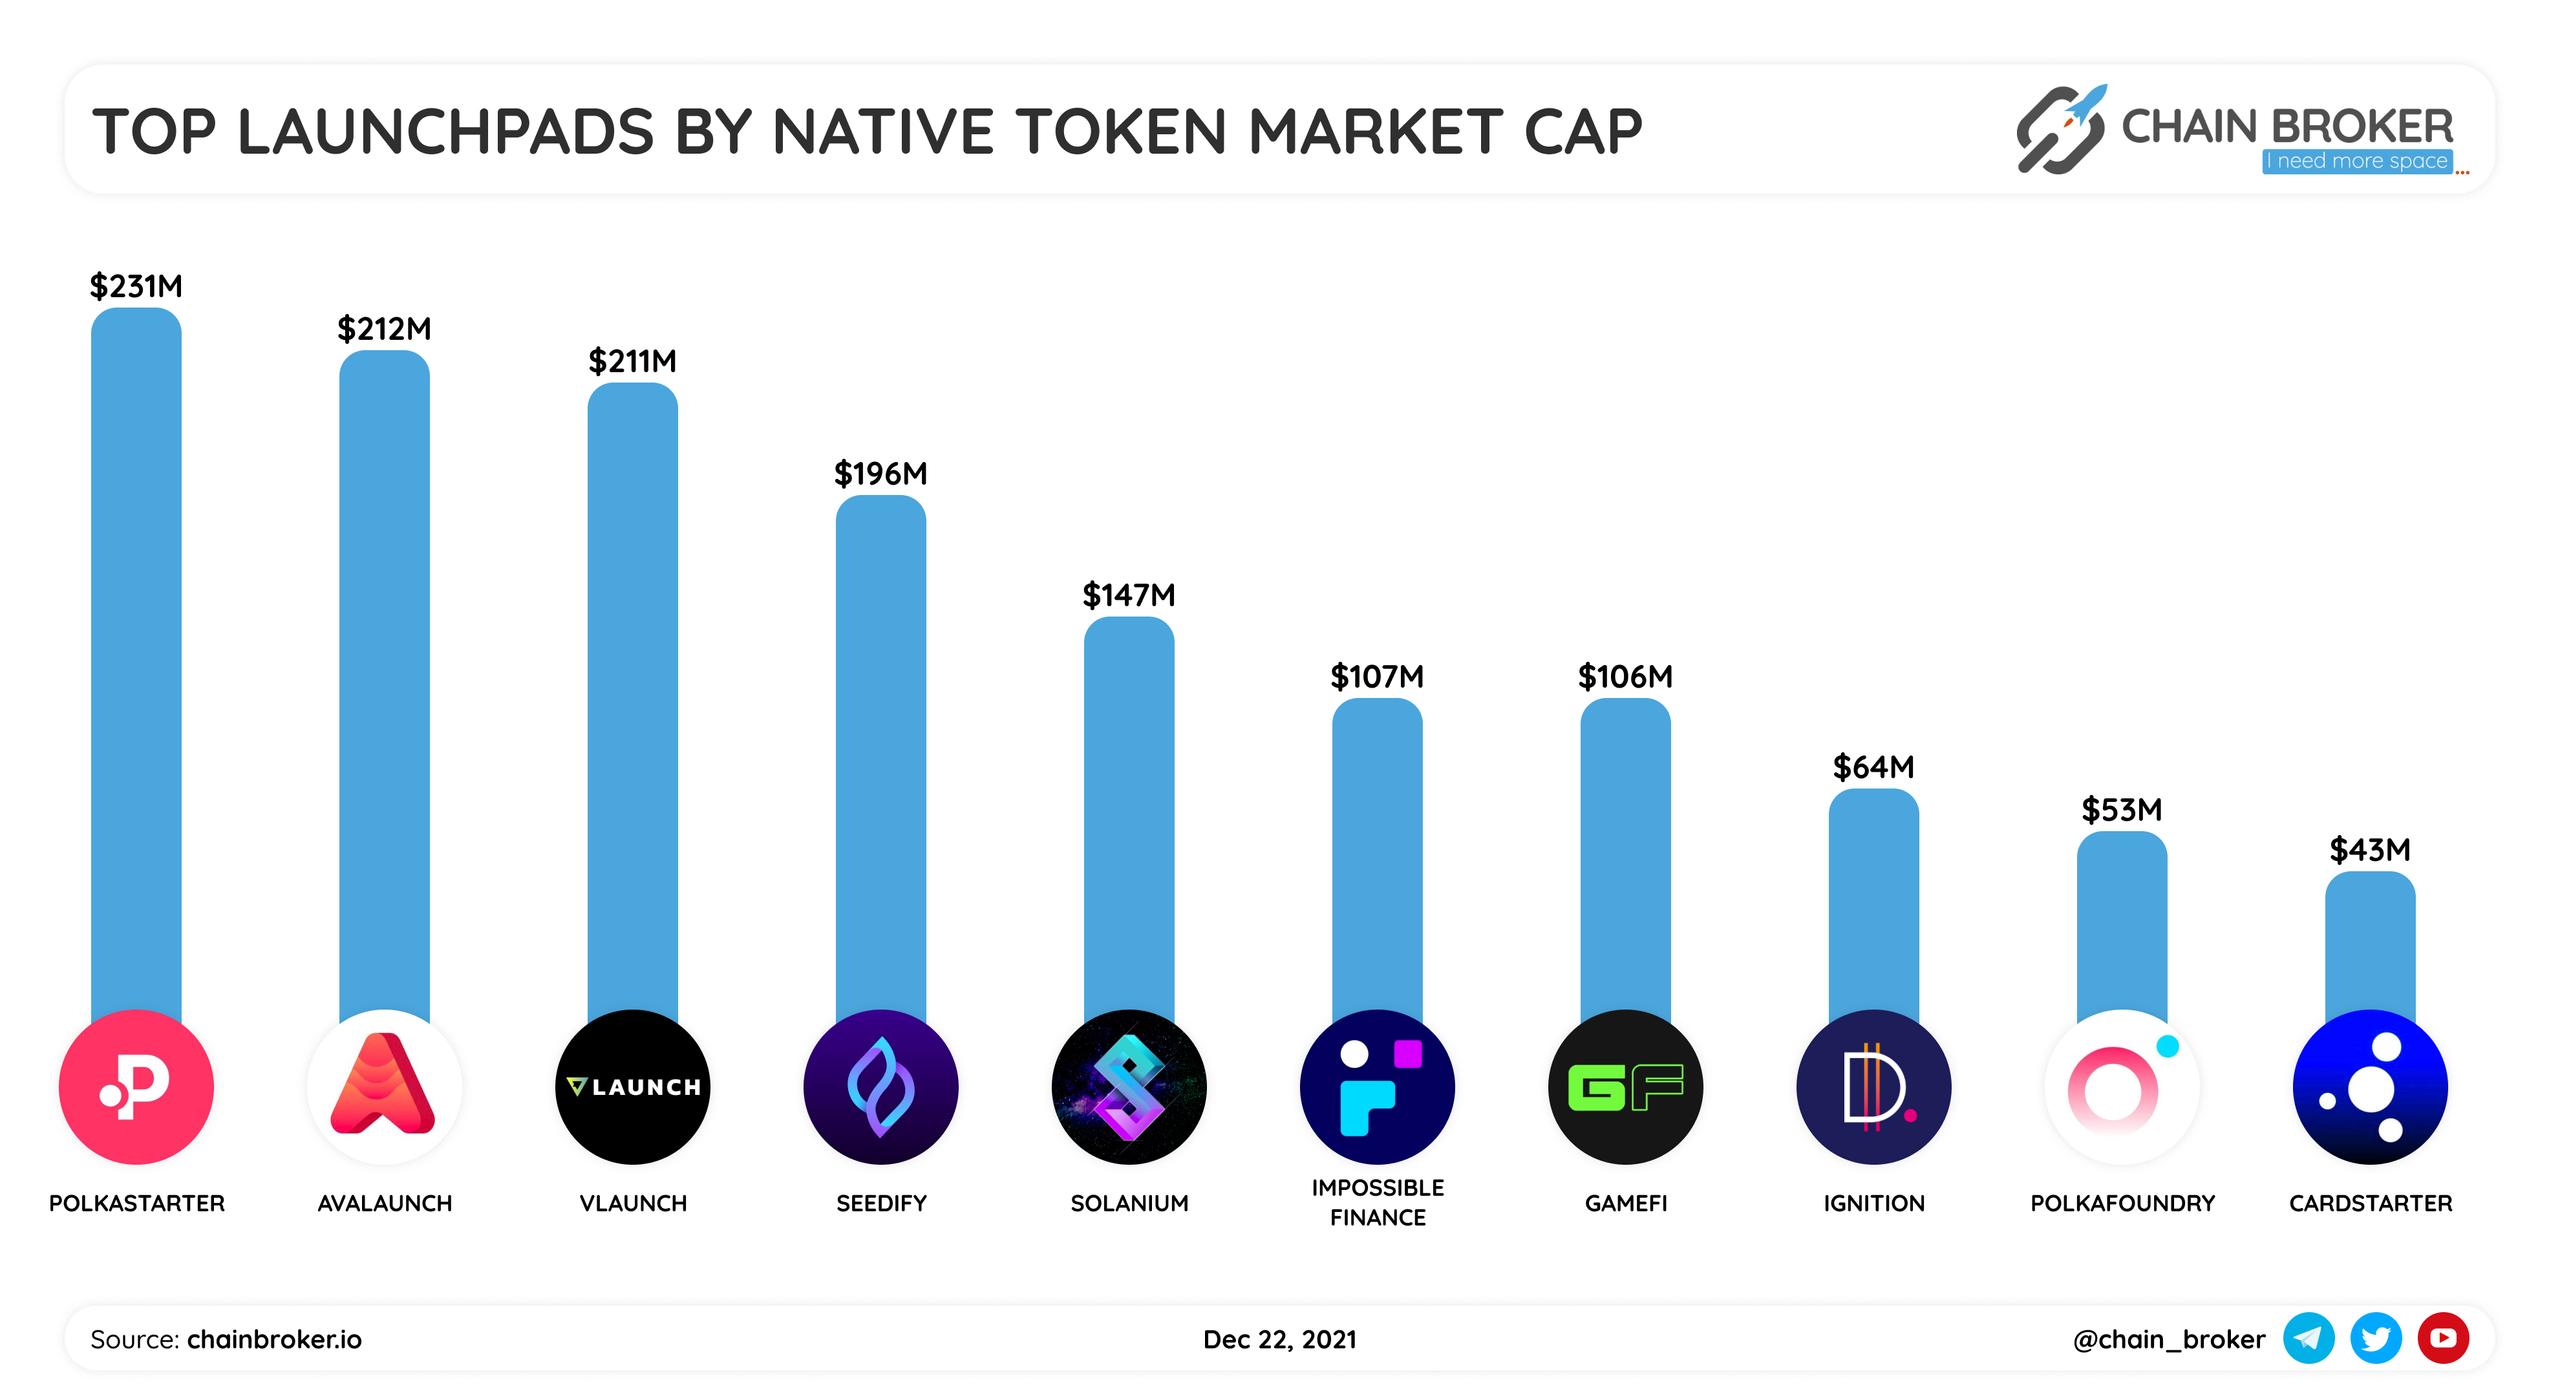 Top launchpads by native token market cap